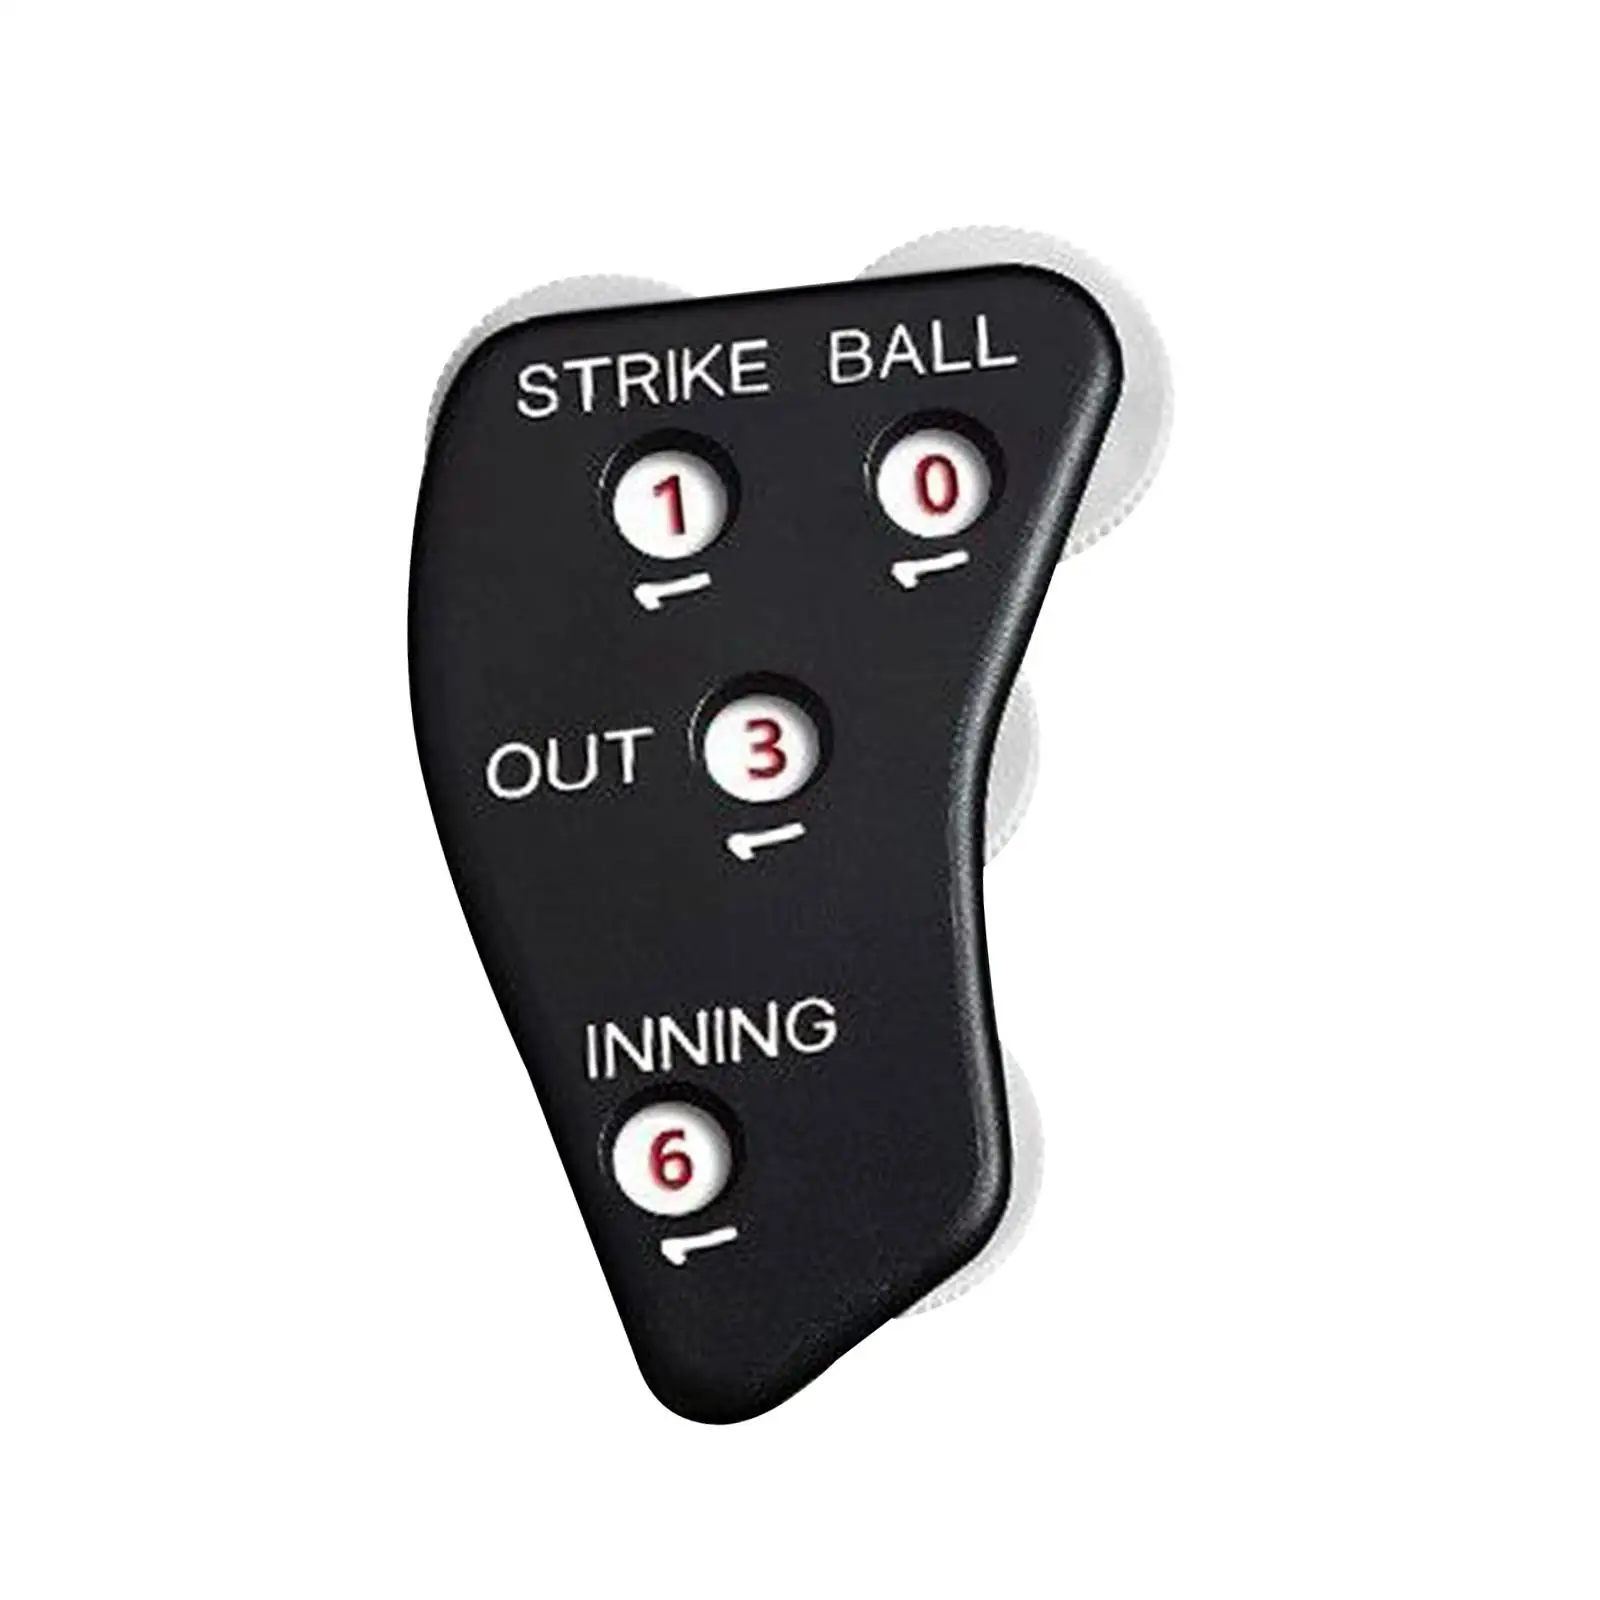 Baseball Umpire , Baseball Umpire Equipment Umpire Indicator Non Slip Surface Softball Umpire Gear